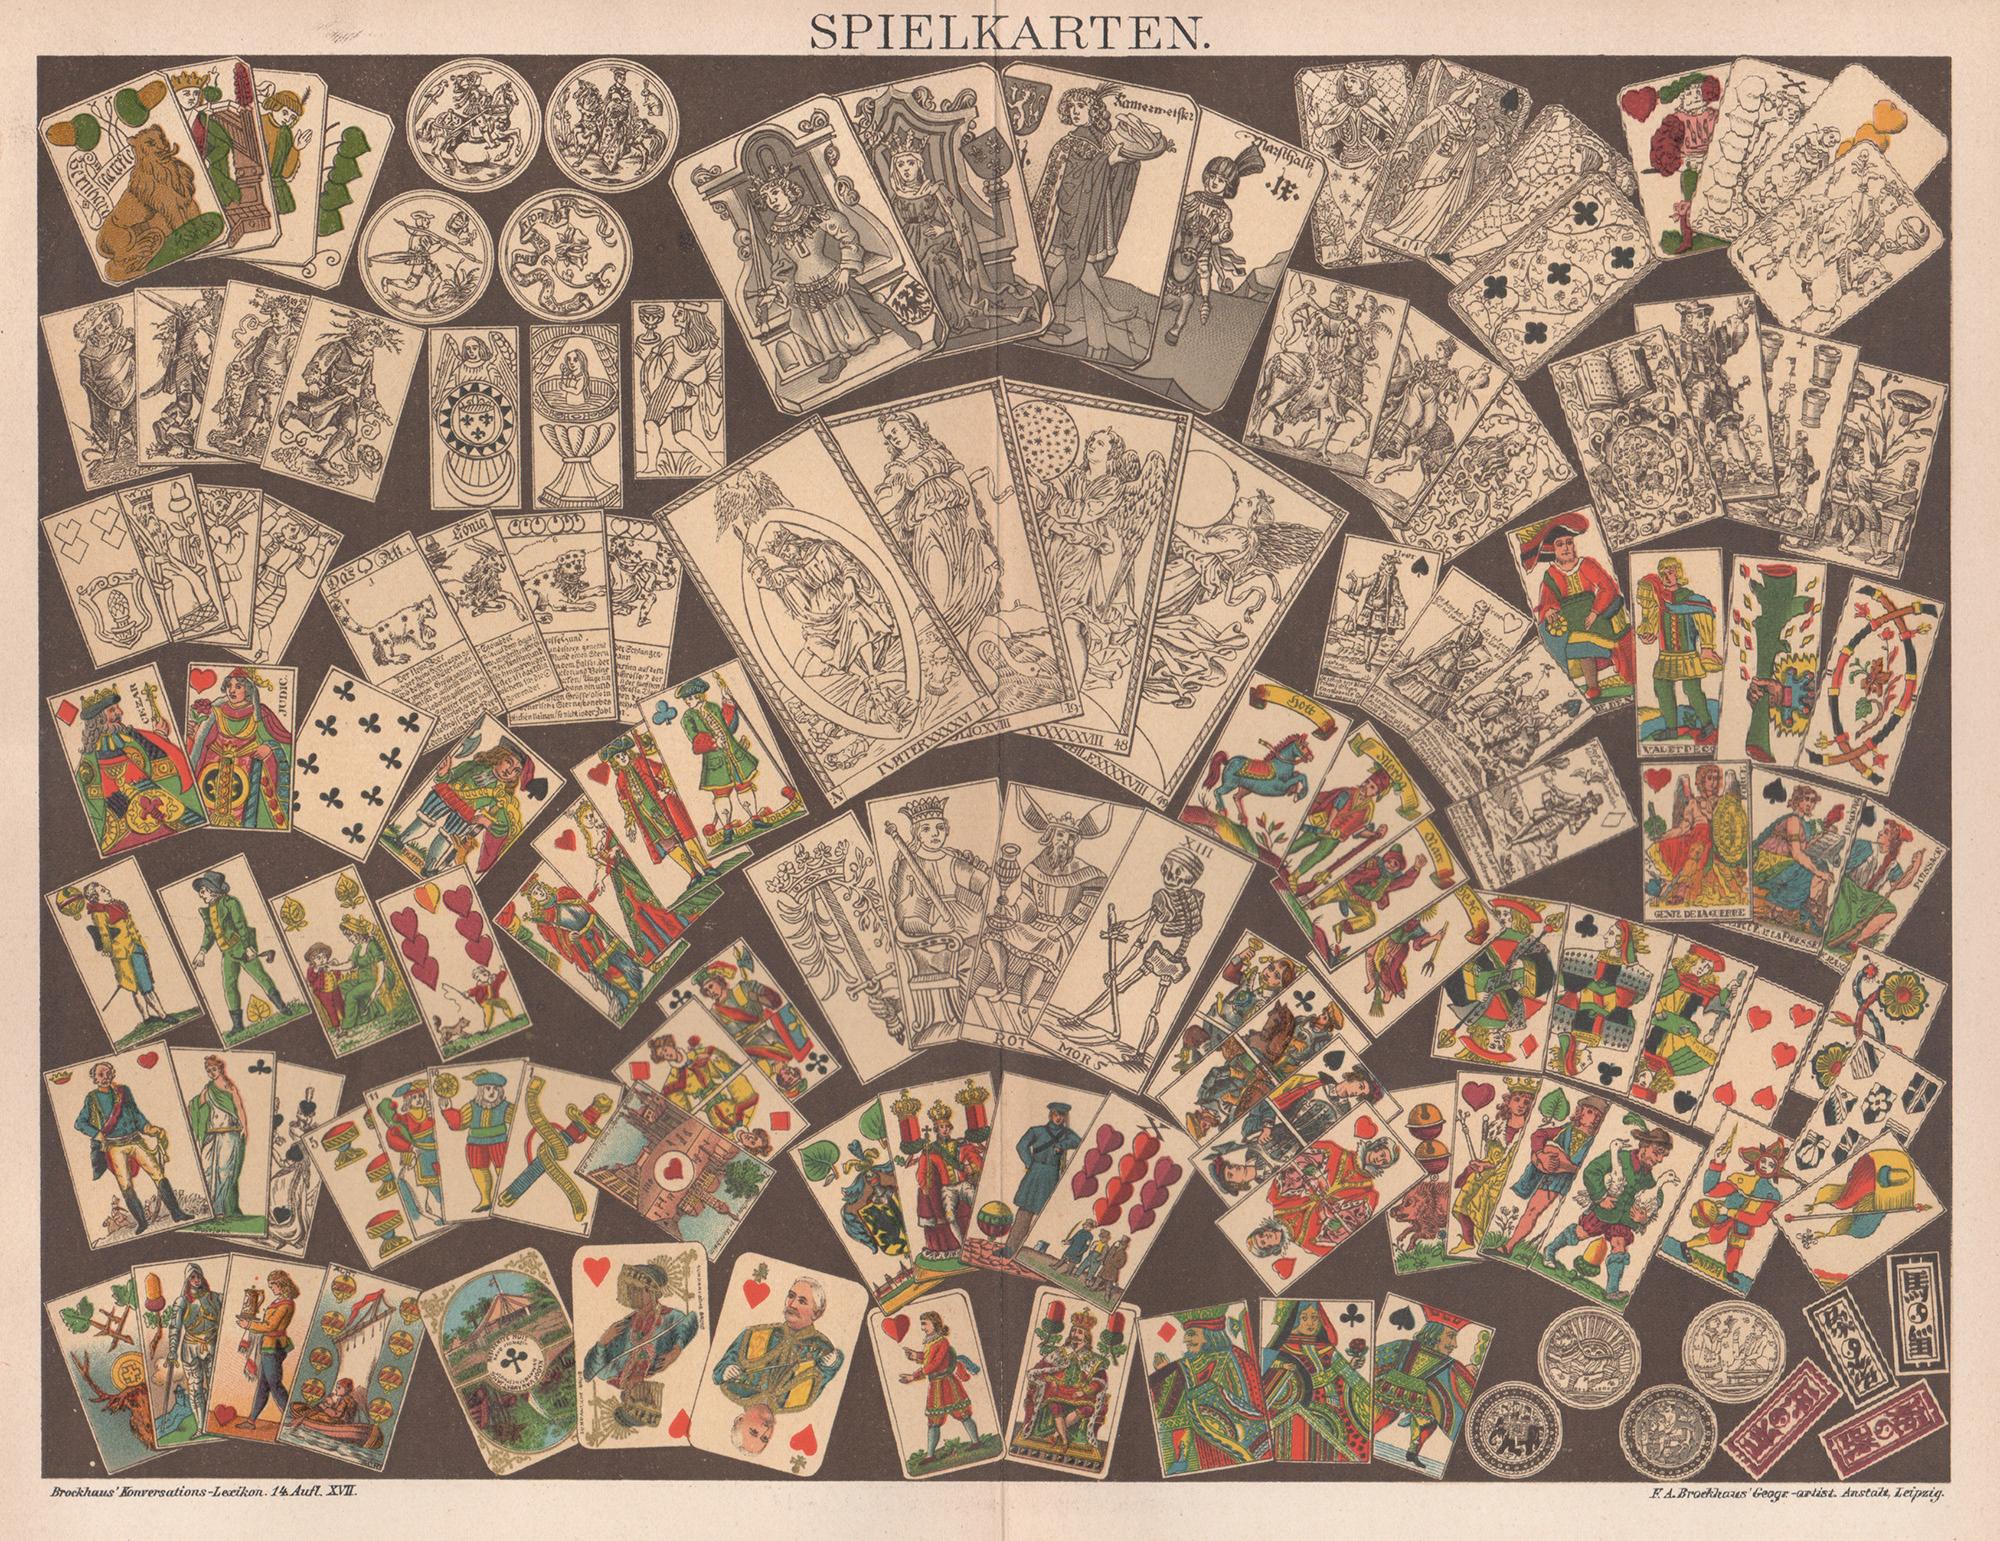 Spielkarten (Playing and tarot cards), German antique print